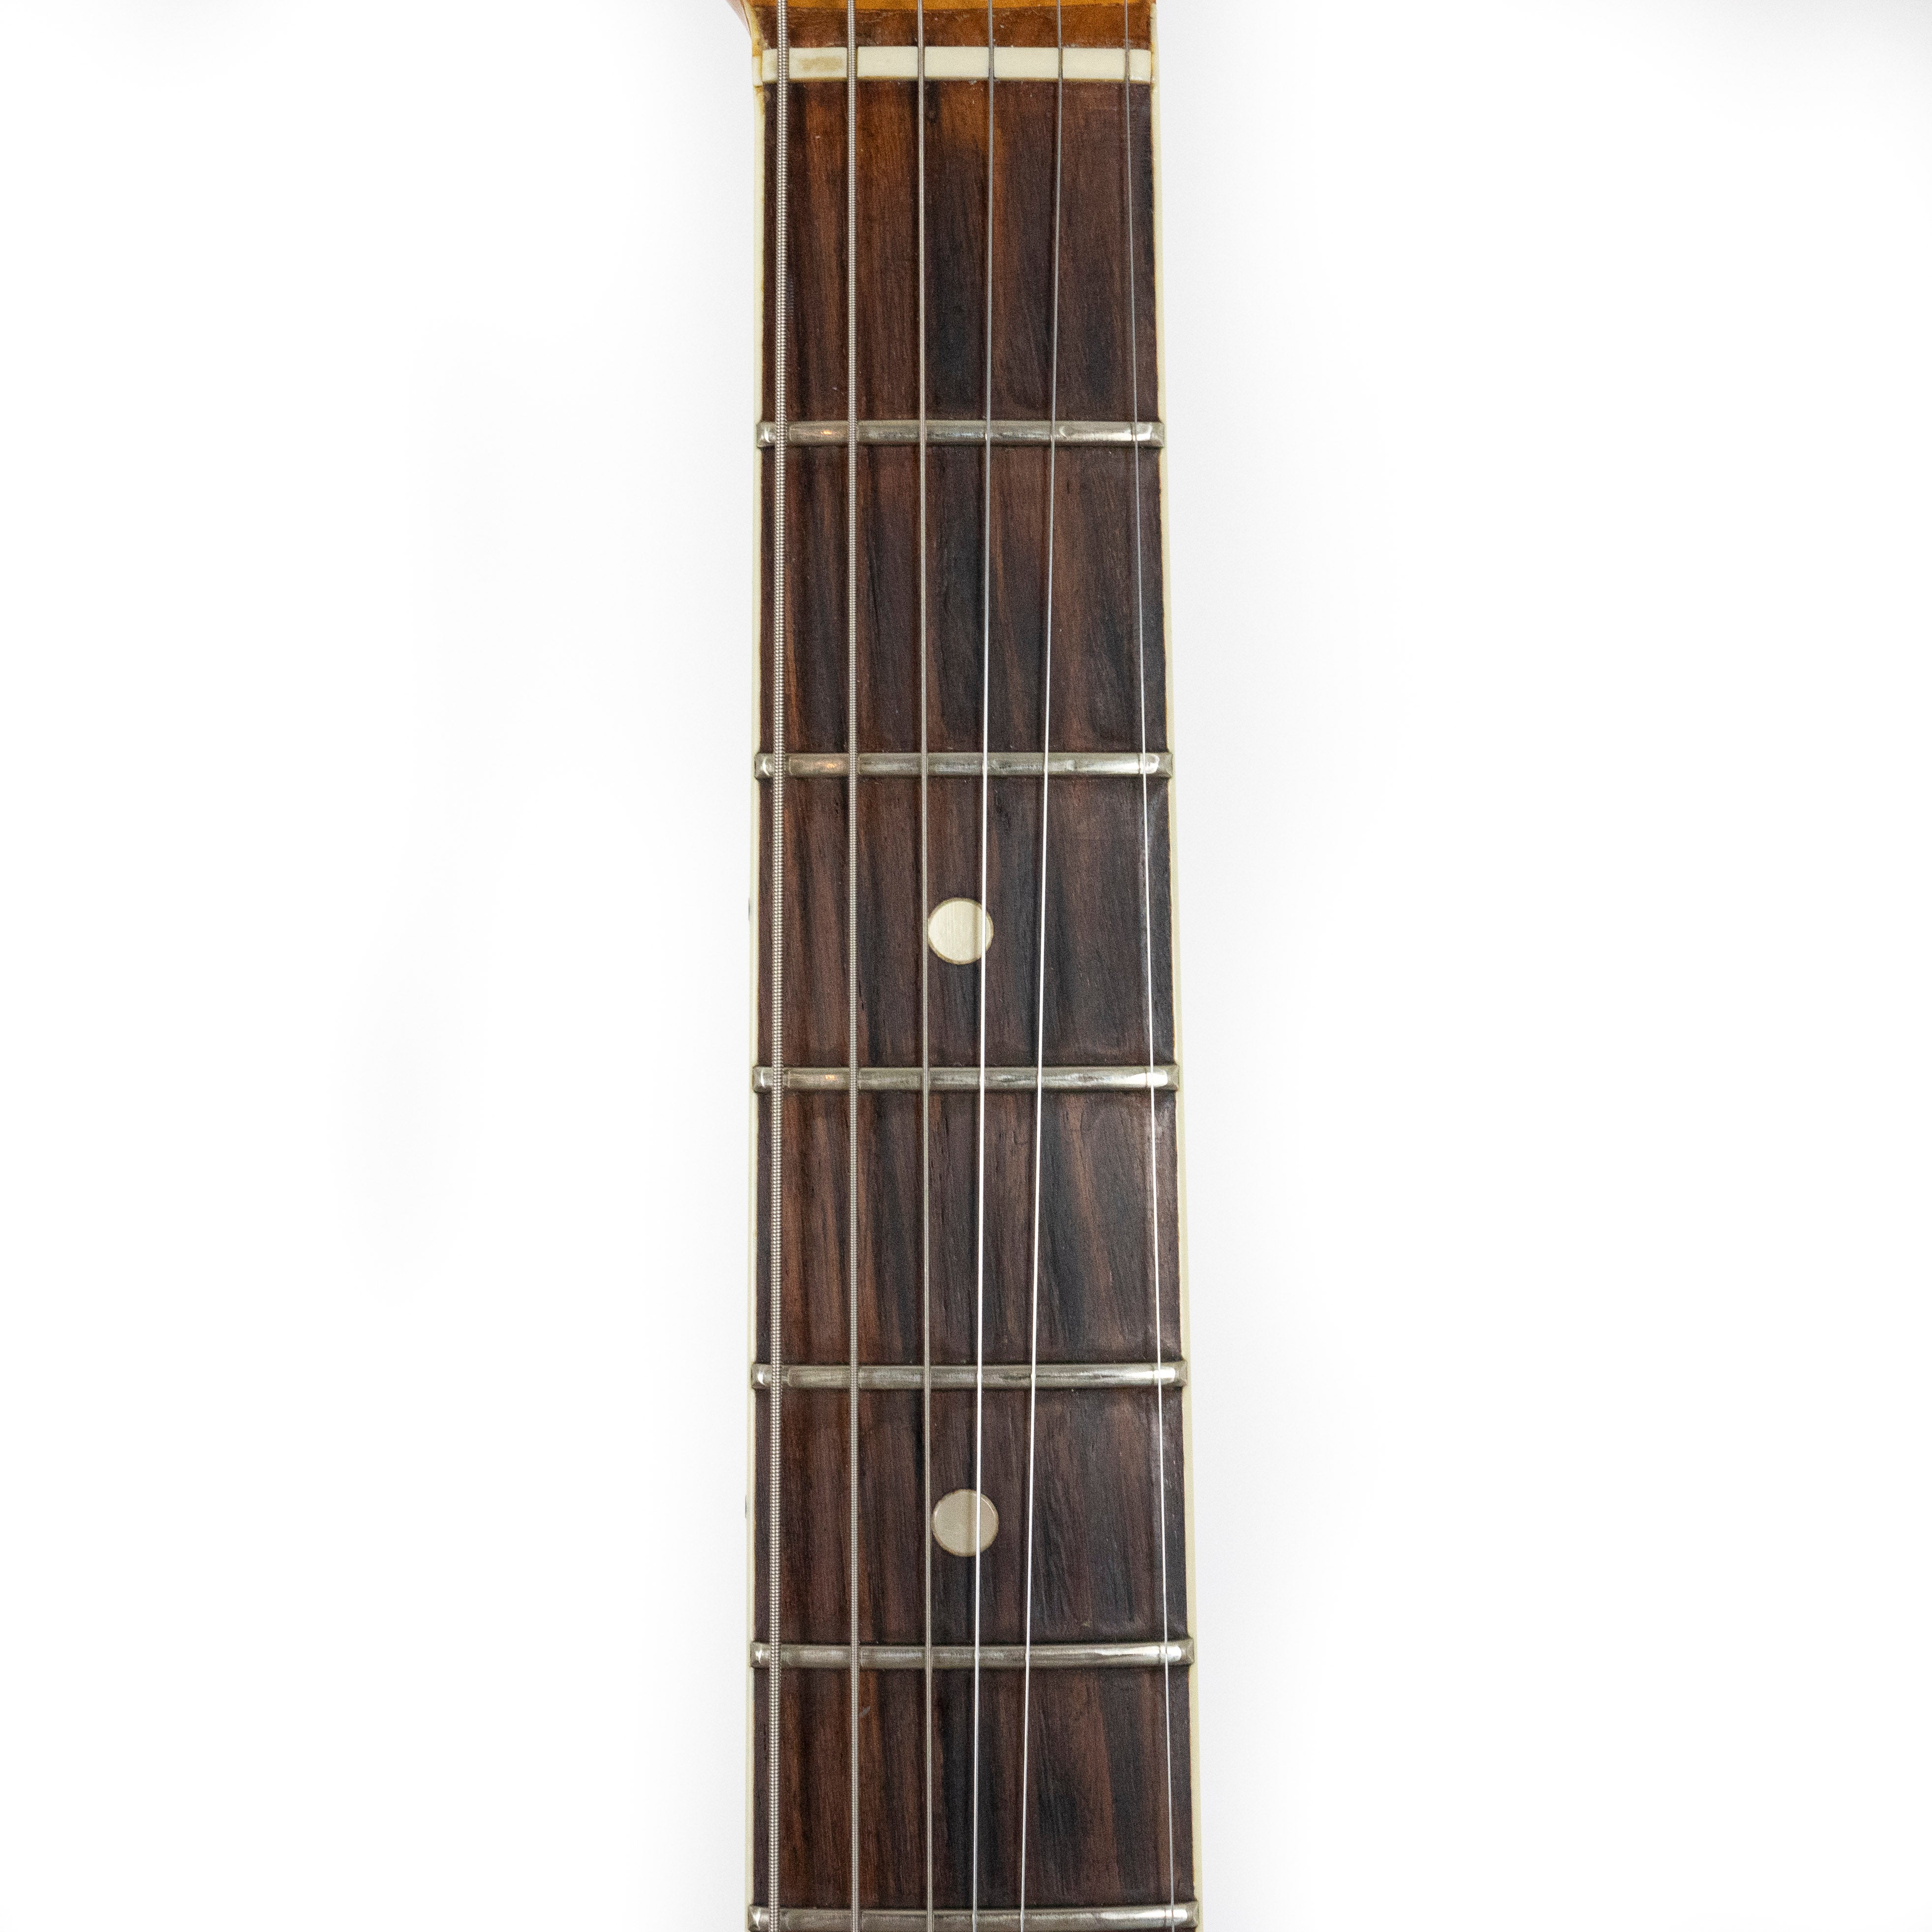 Fender 1966 Jazzmaster Sunburst